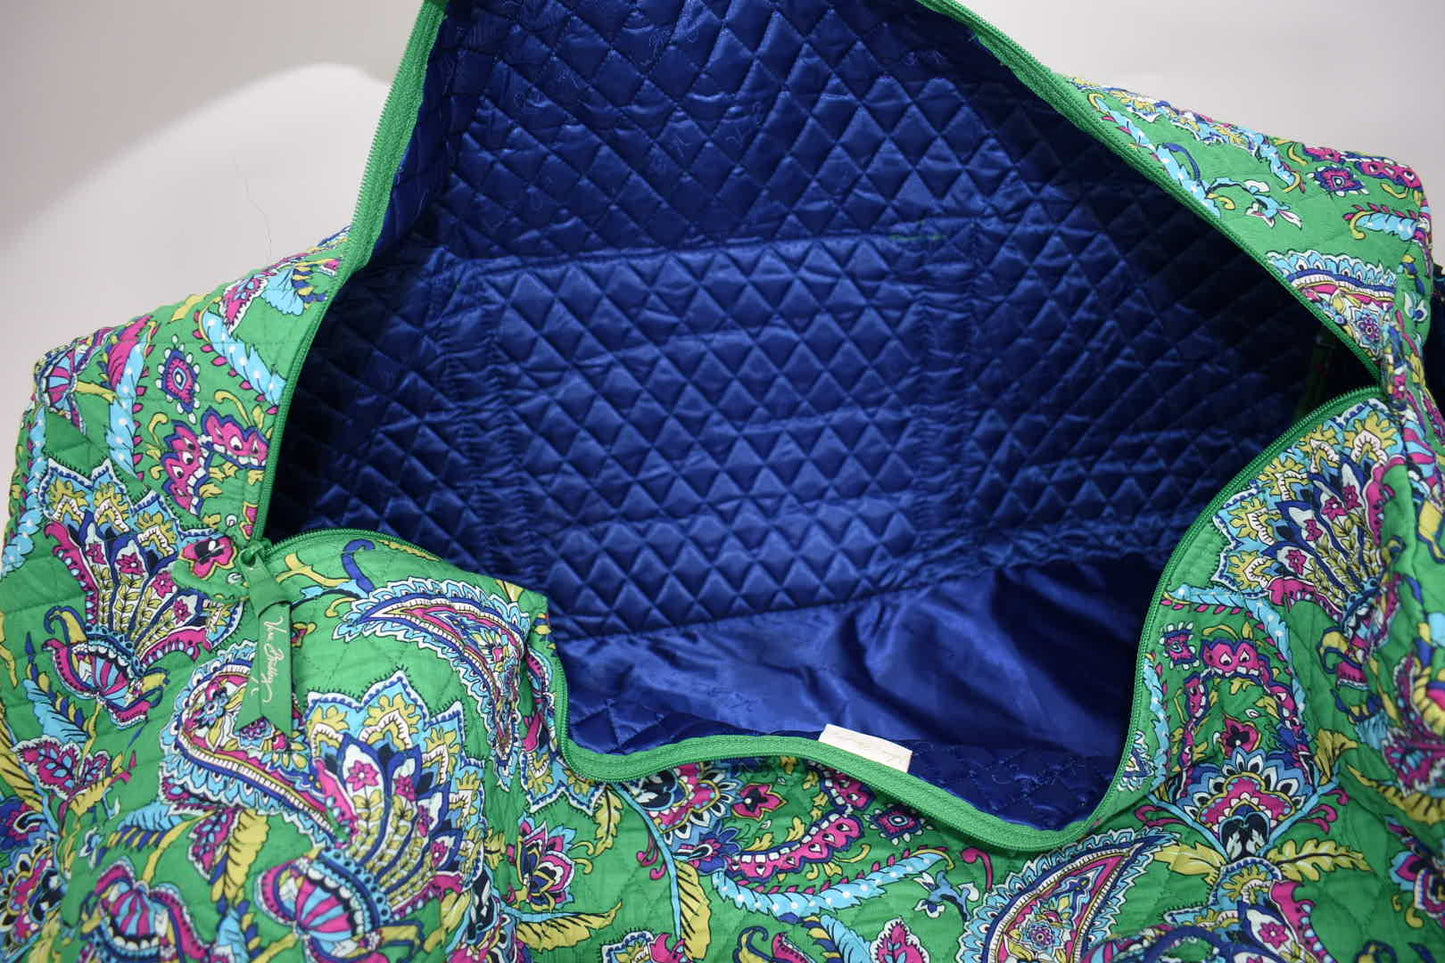 Vera Bradley XL Duffel Bag in "Emerald Paisley" Pattern